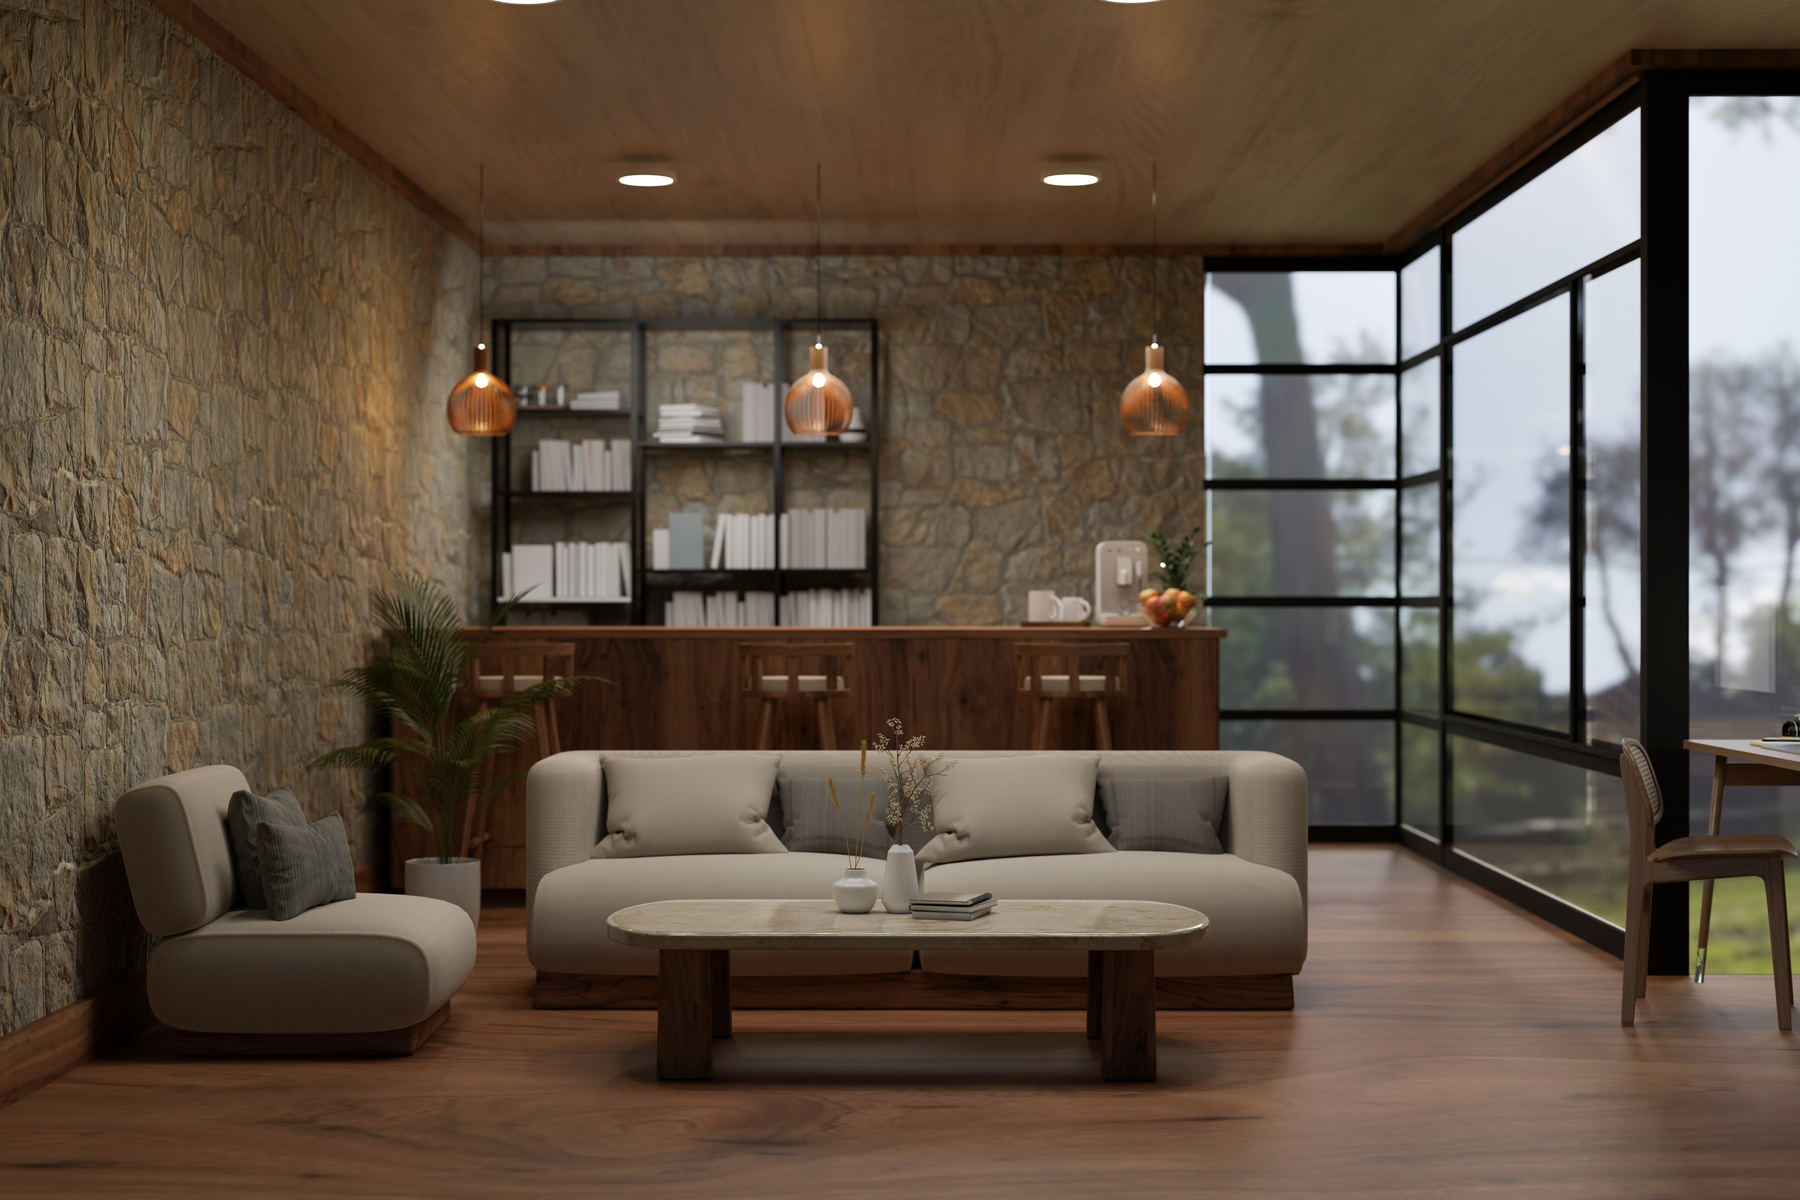 Interior design of vintage mid century living room with stone wa